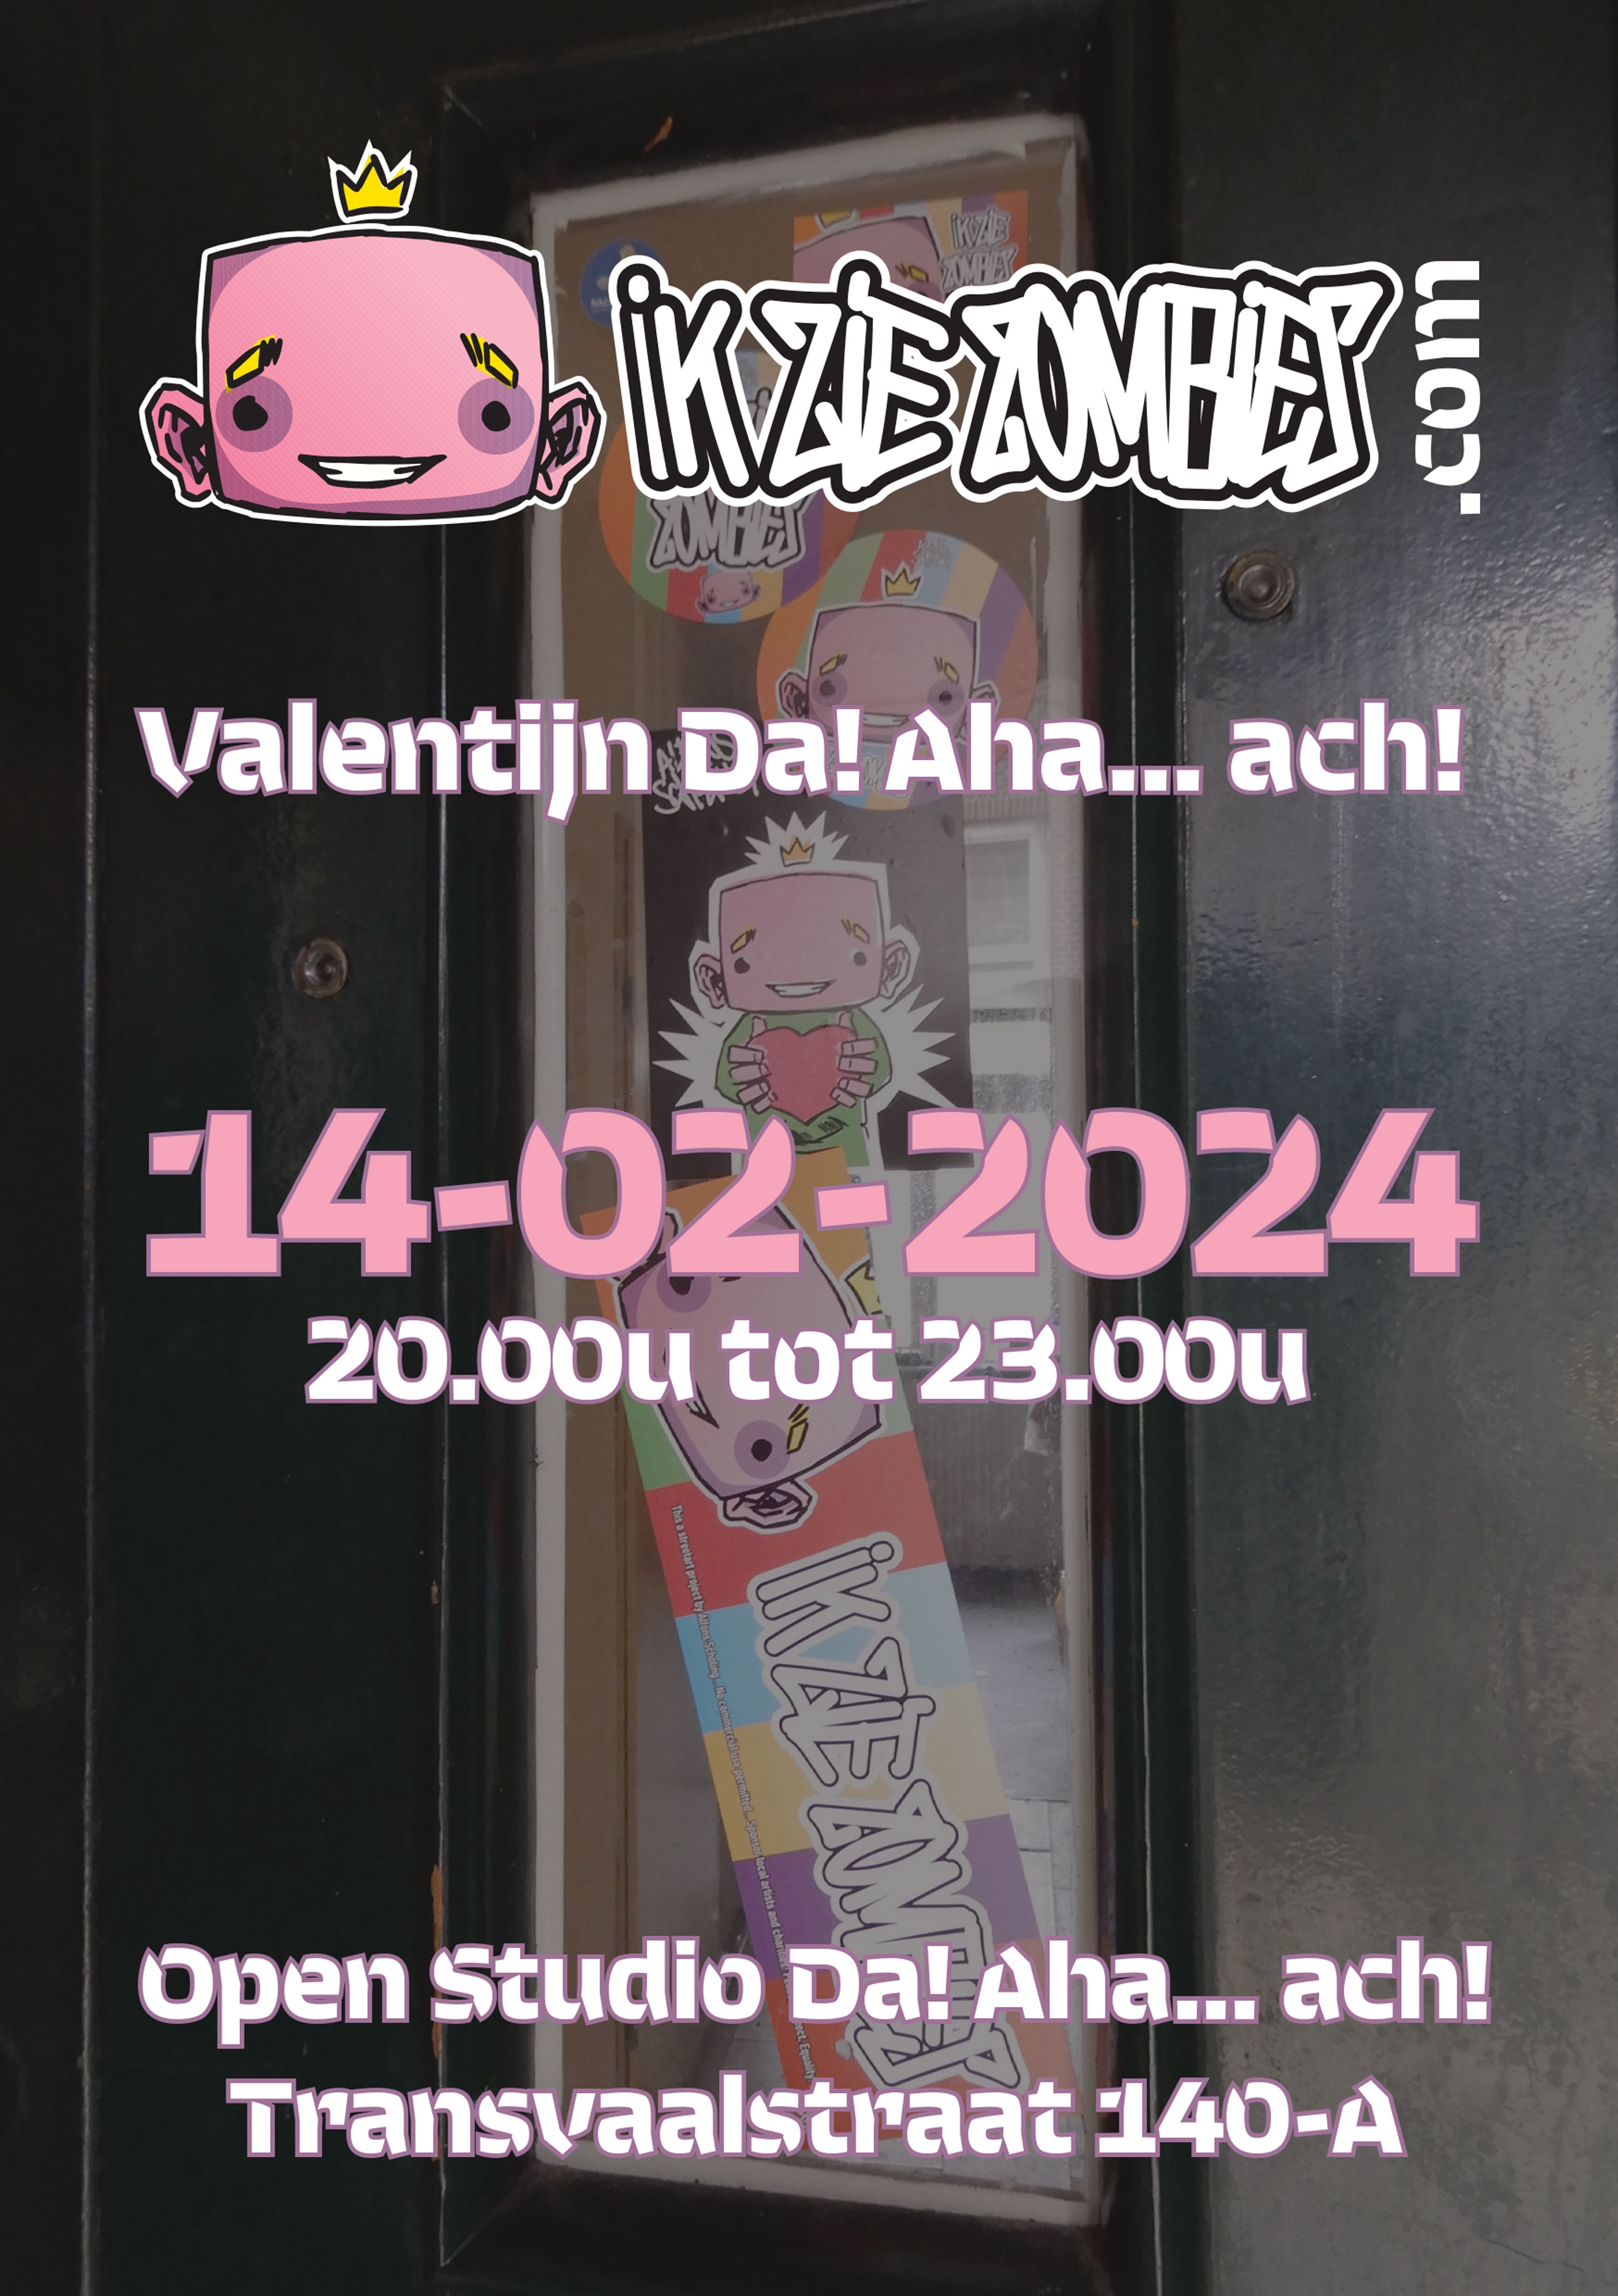 “Zombie Love Slayer Gathering: A Valentine’s Quest at ikziezombies.com Studio”